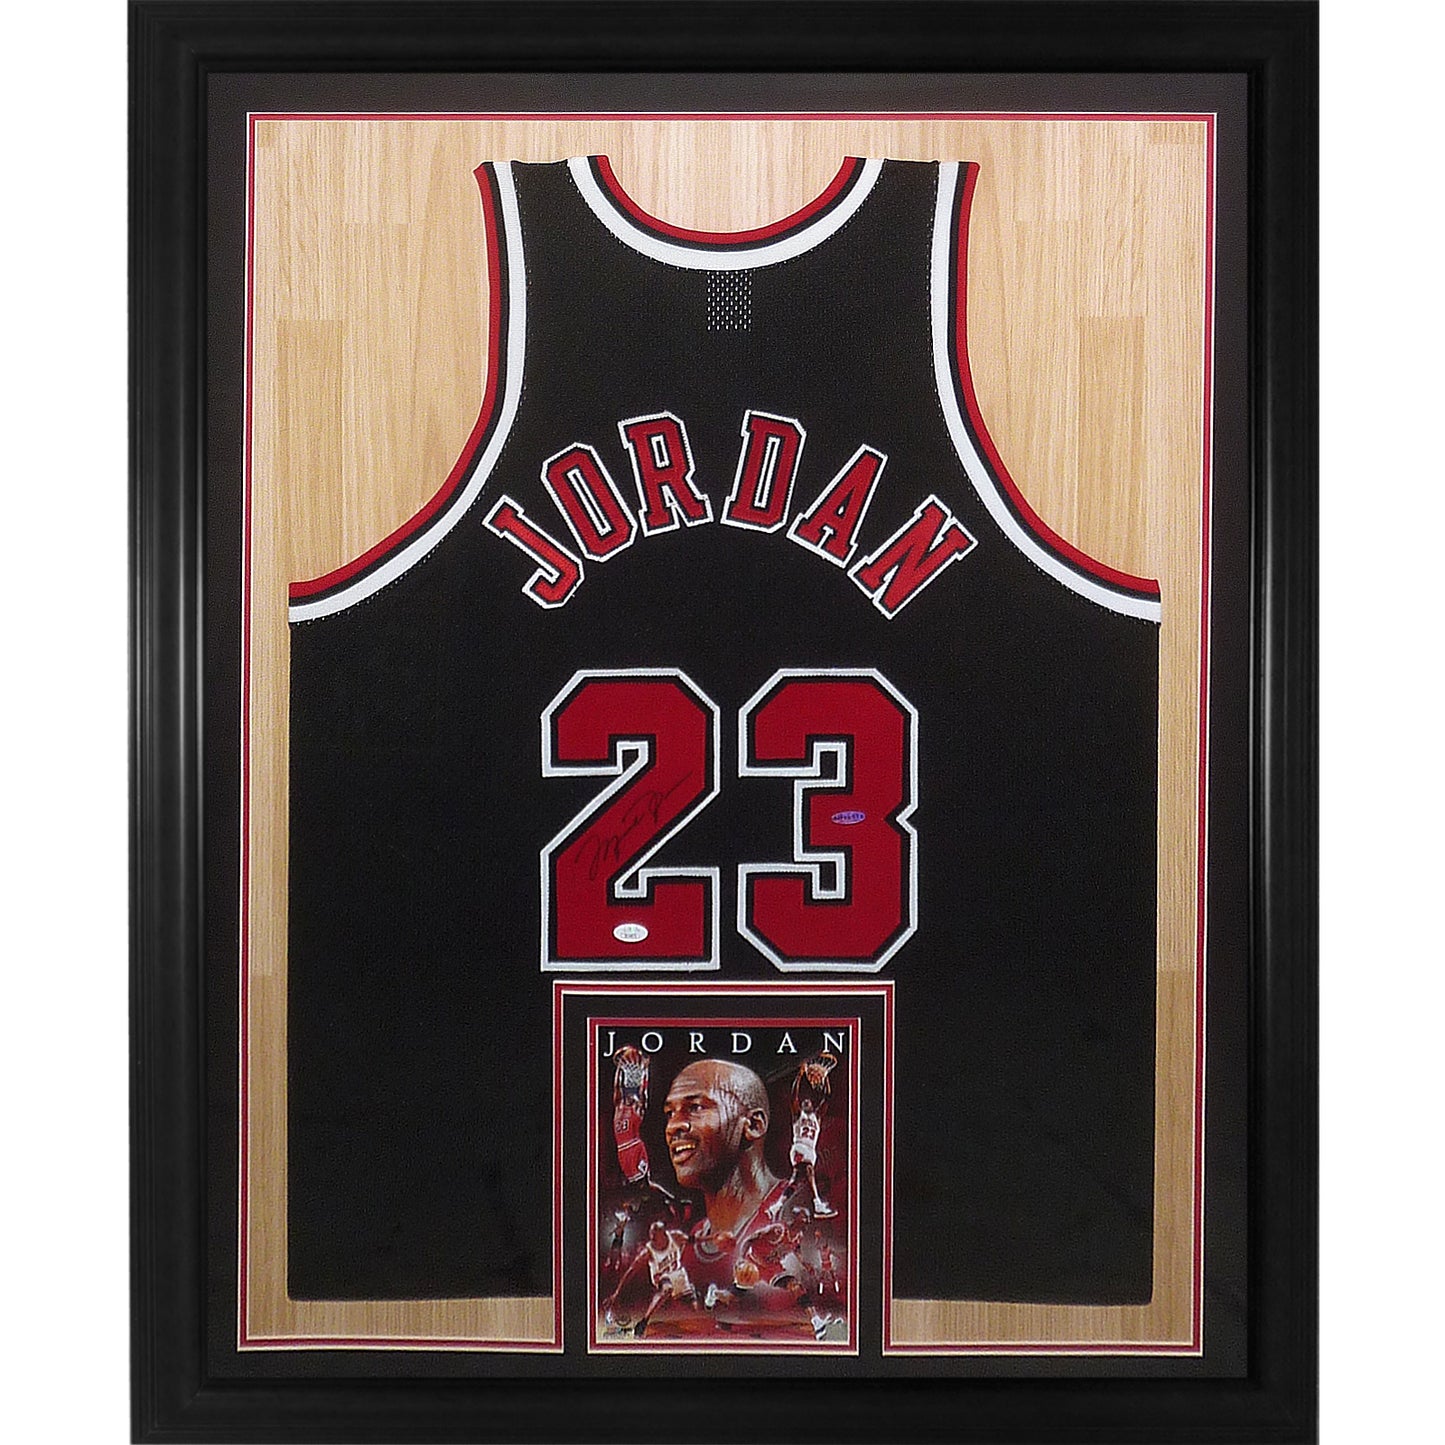 Upper Deck Michael Jordan Red Chicago Bulls Autographed Jersey